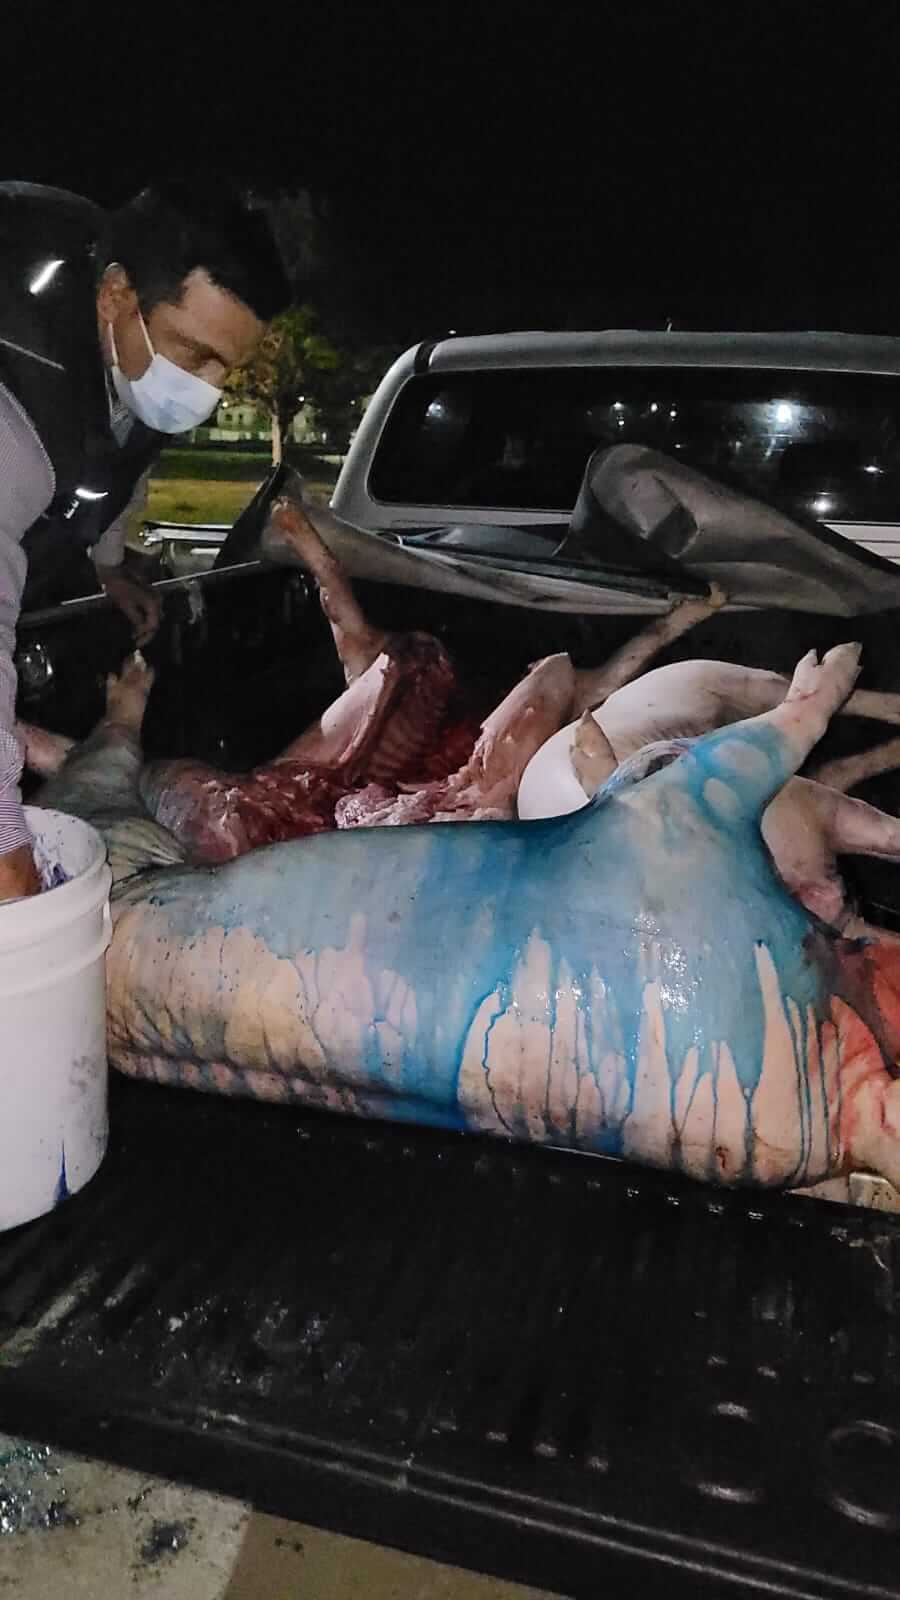 En matadero clandestino incautan 300 kilos de carne de cerdo en Pitalito